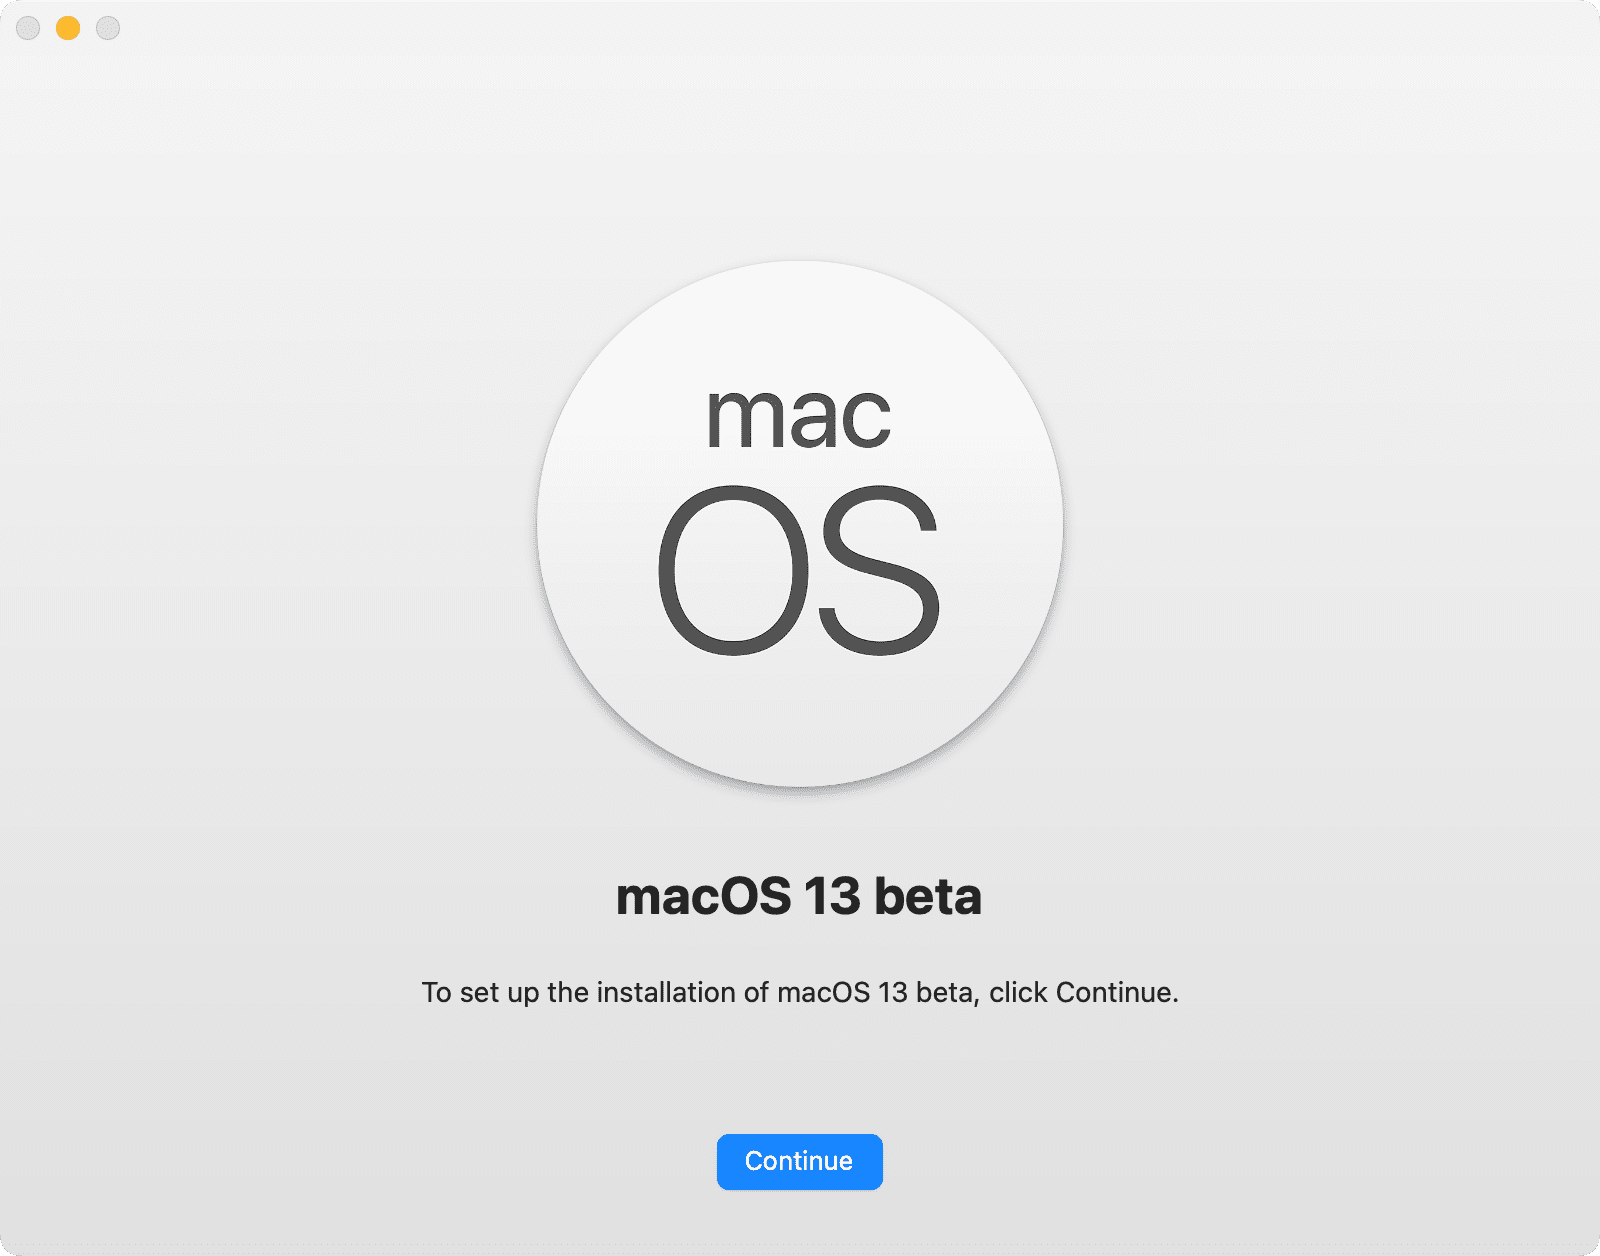 Configurer l'installation de macOS 13 bêta